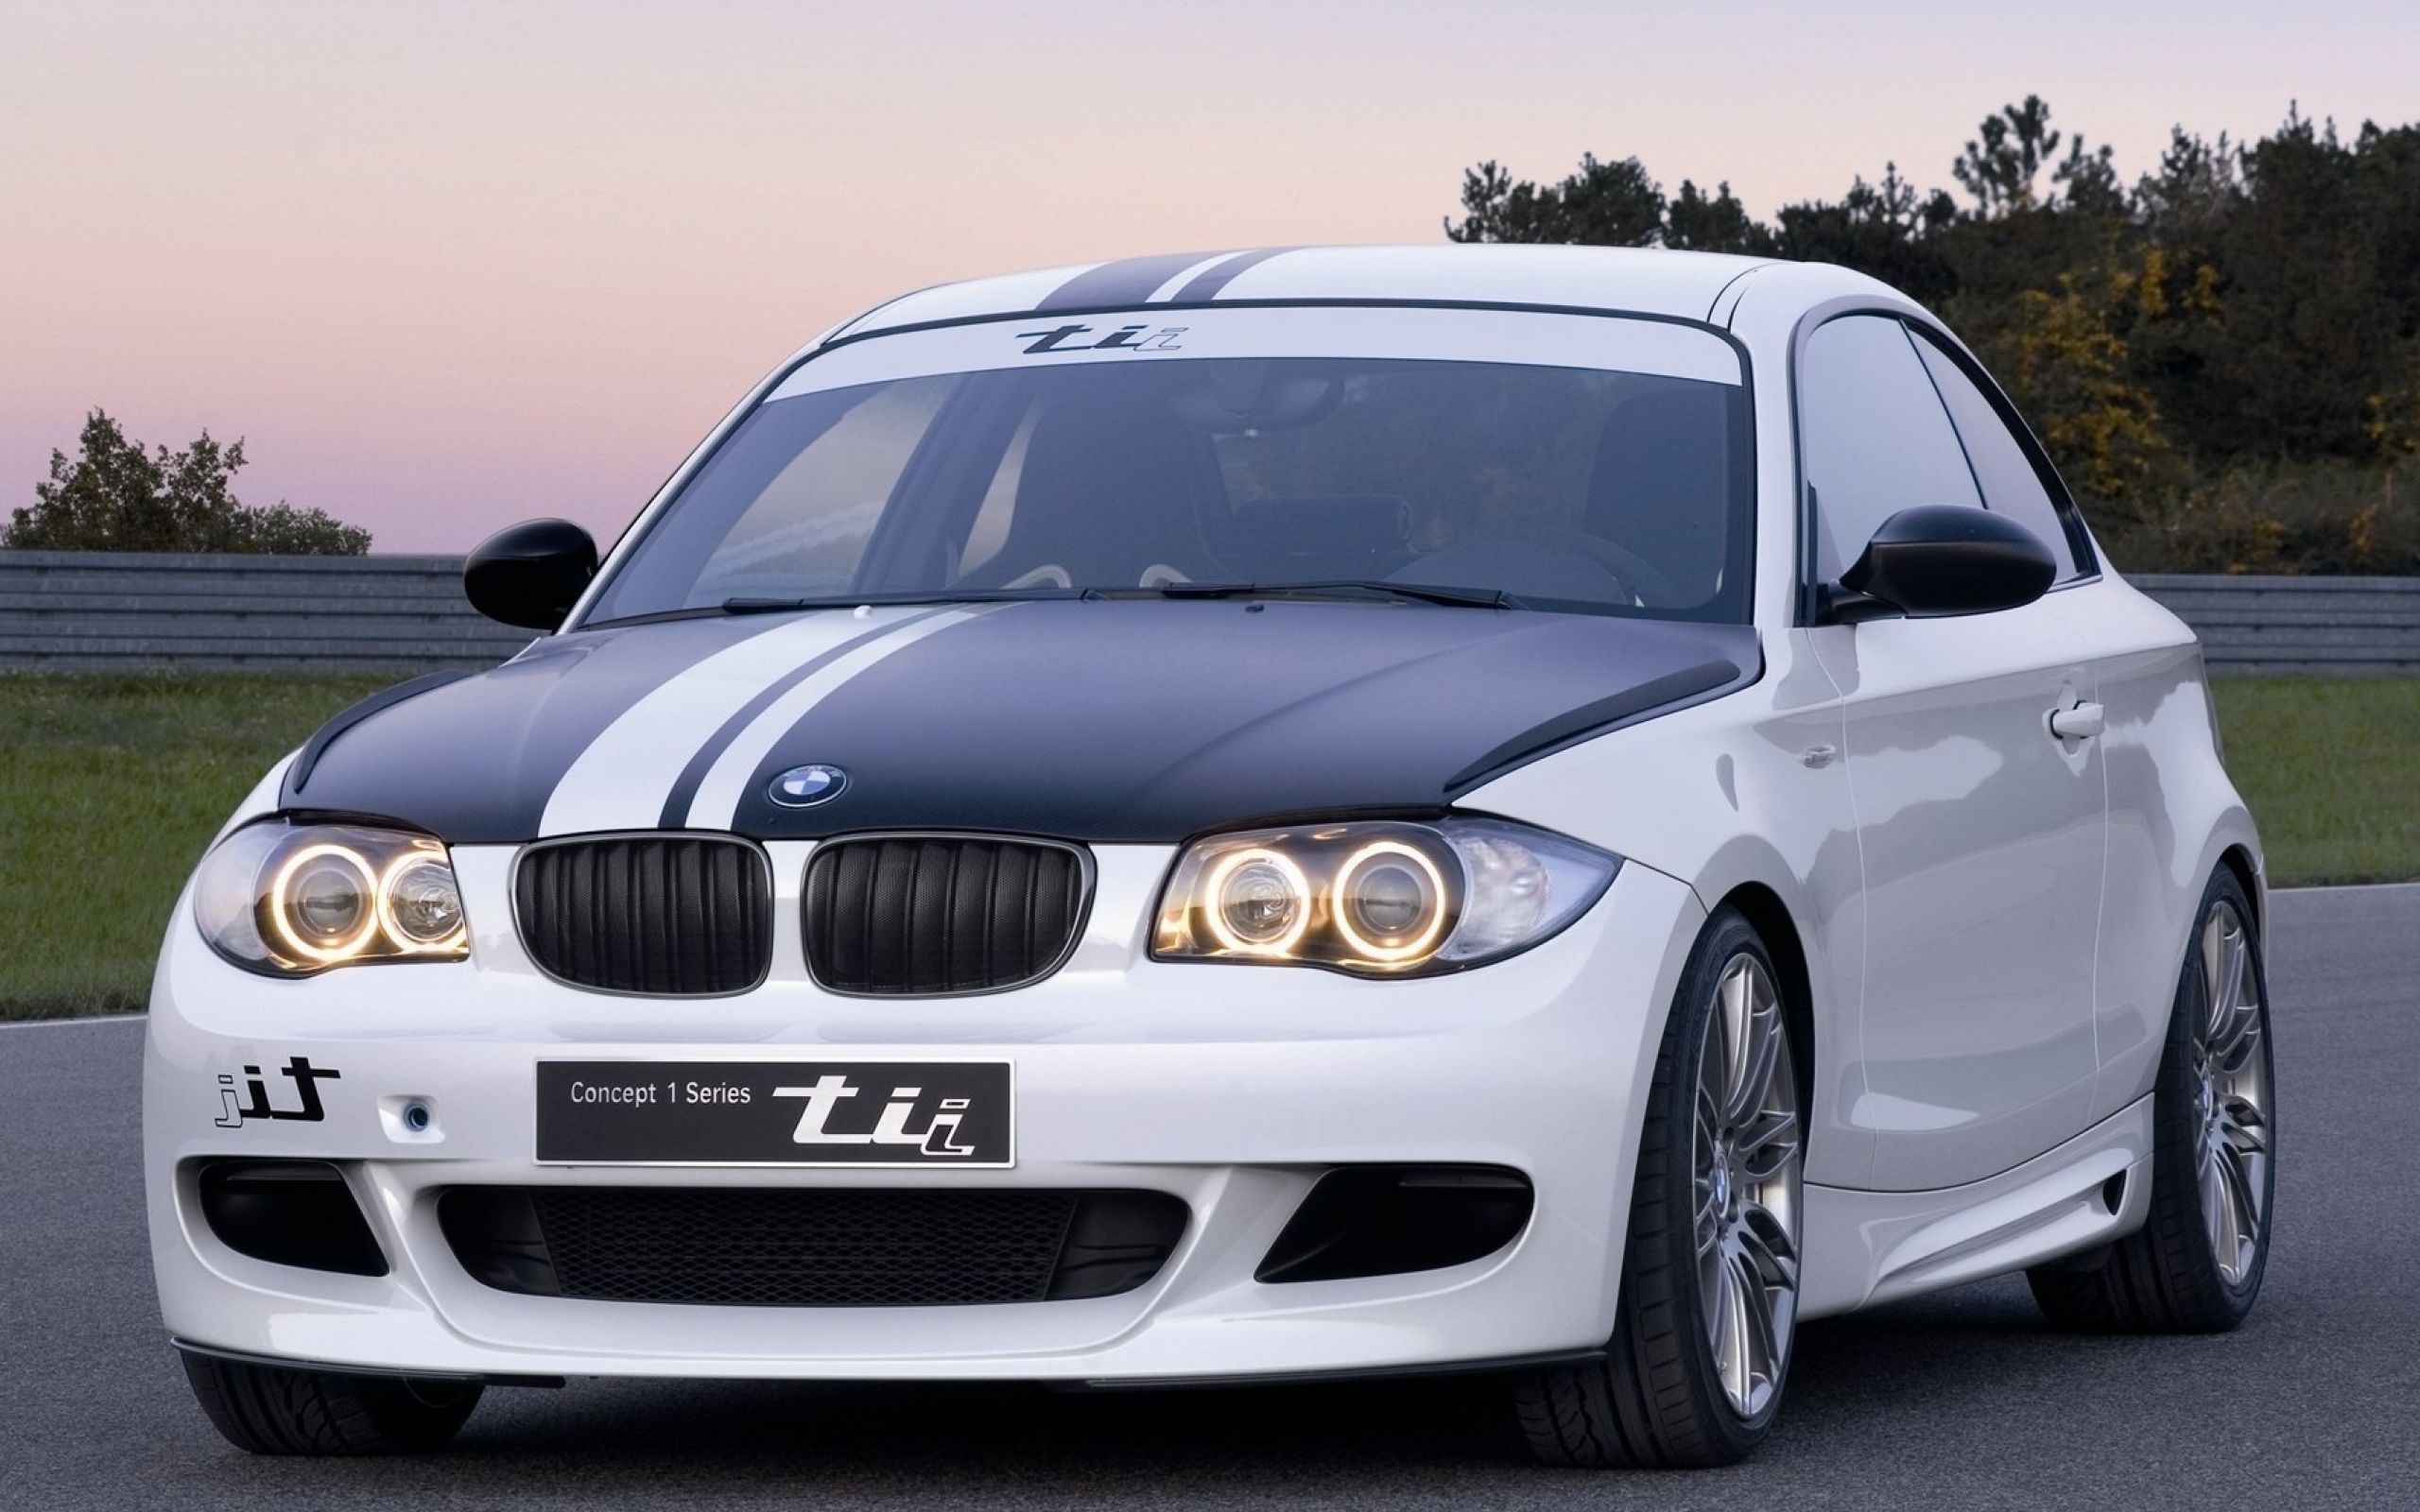 Картинки бмв. BMW 1 Series tii. BMW Concept 1 Series tii. BMW Concept 1 Series tii '07. BMW E 524.